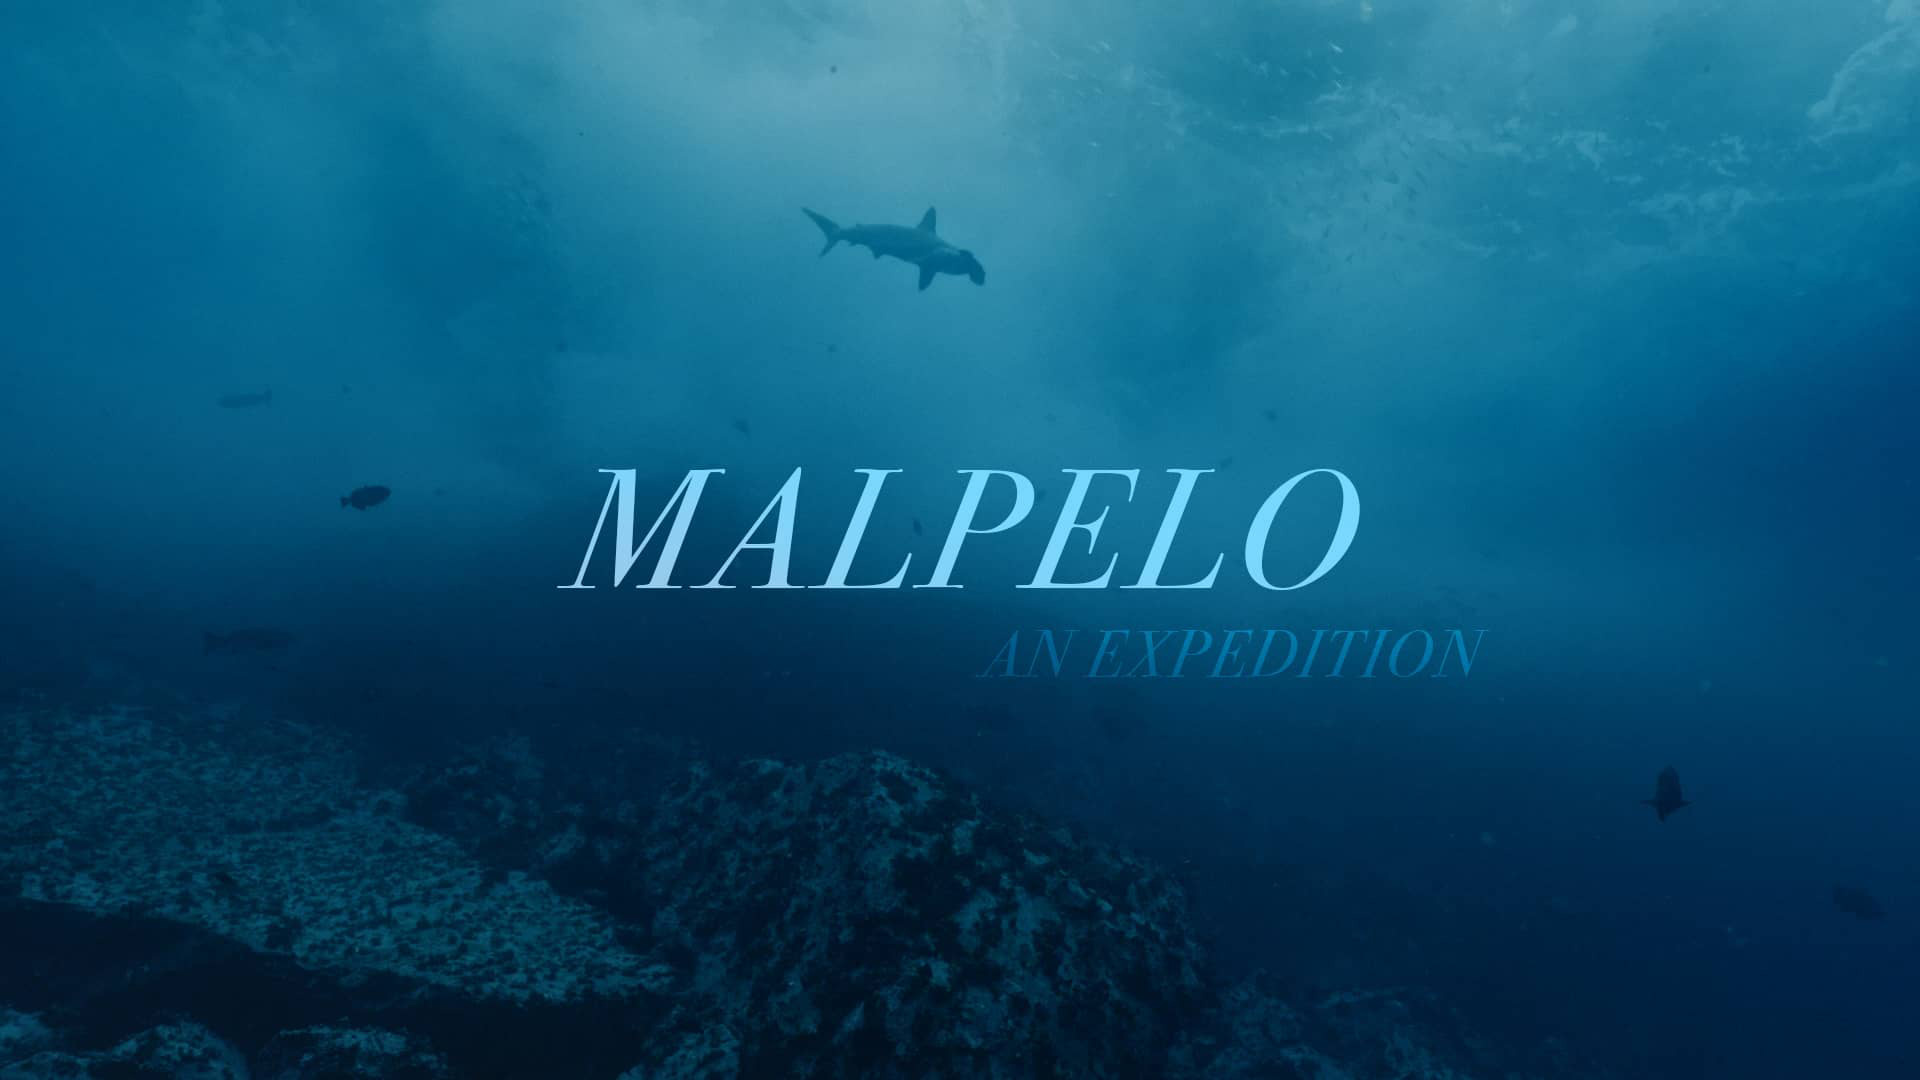 Malpelo: An Expedition